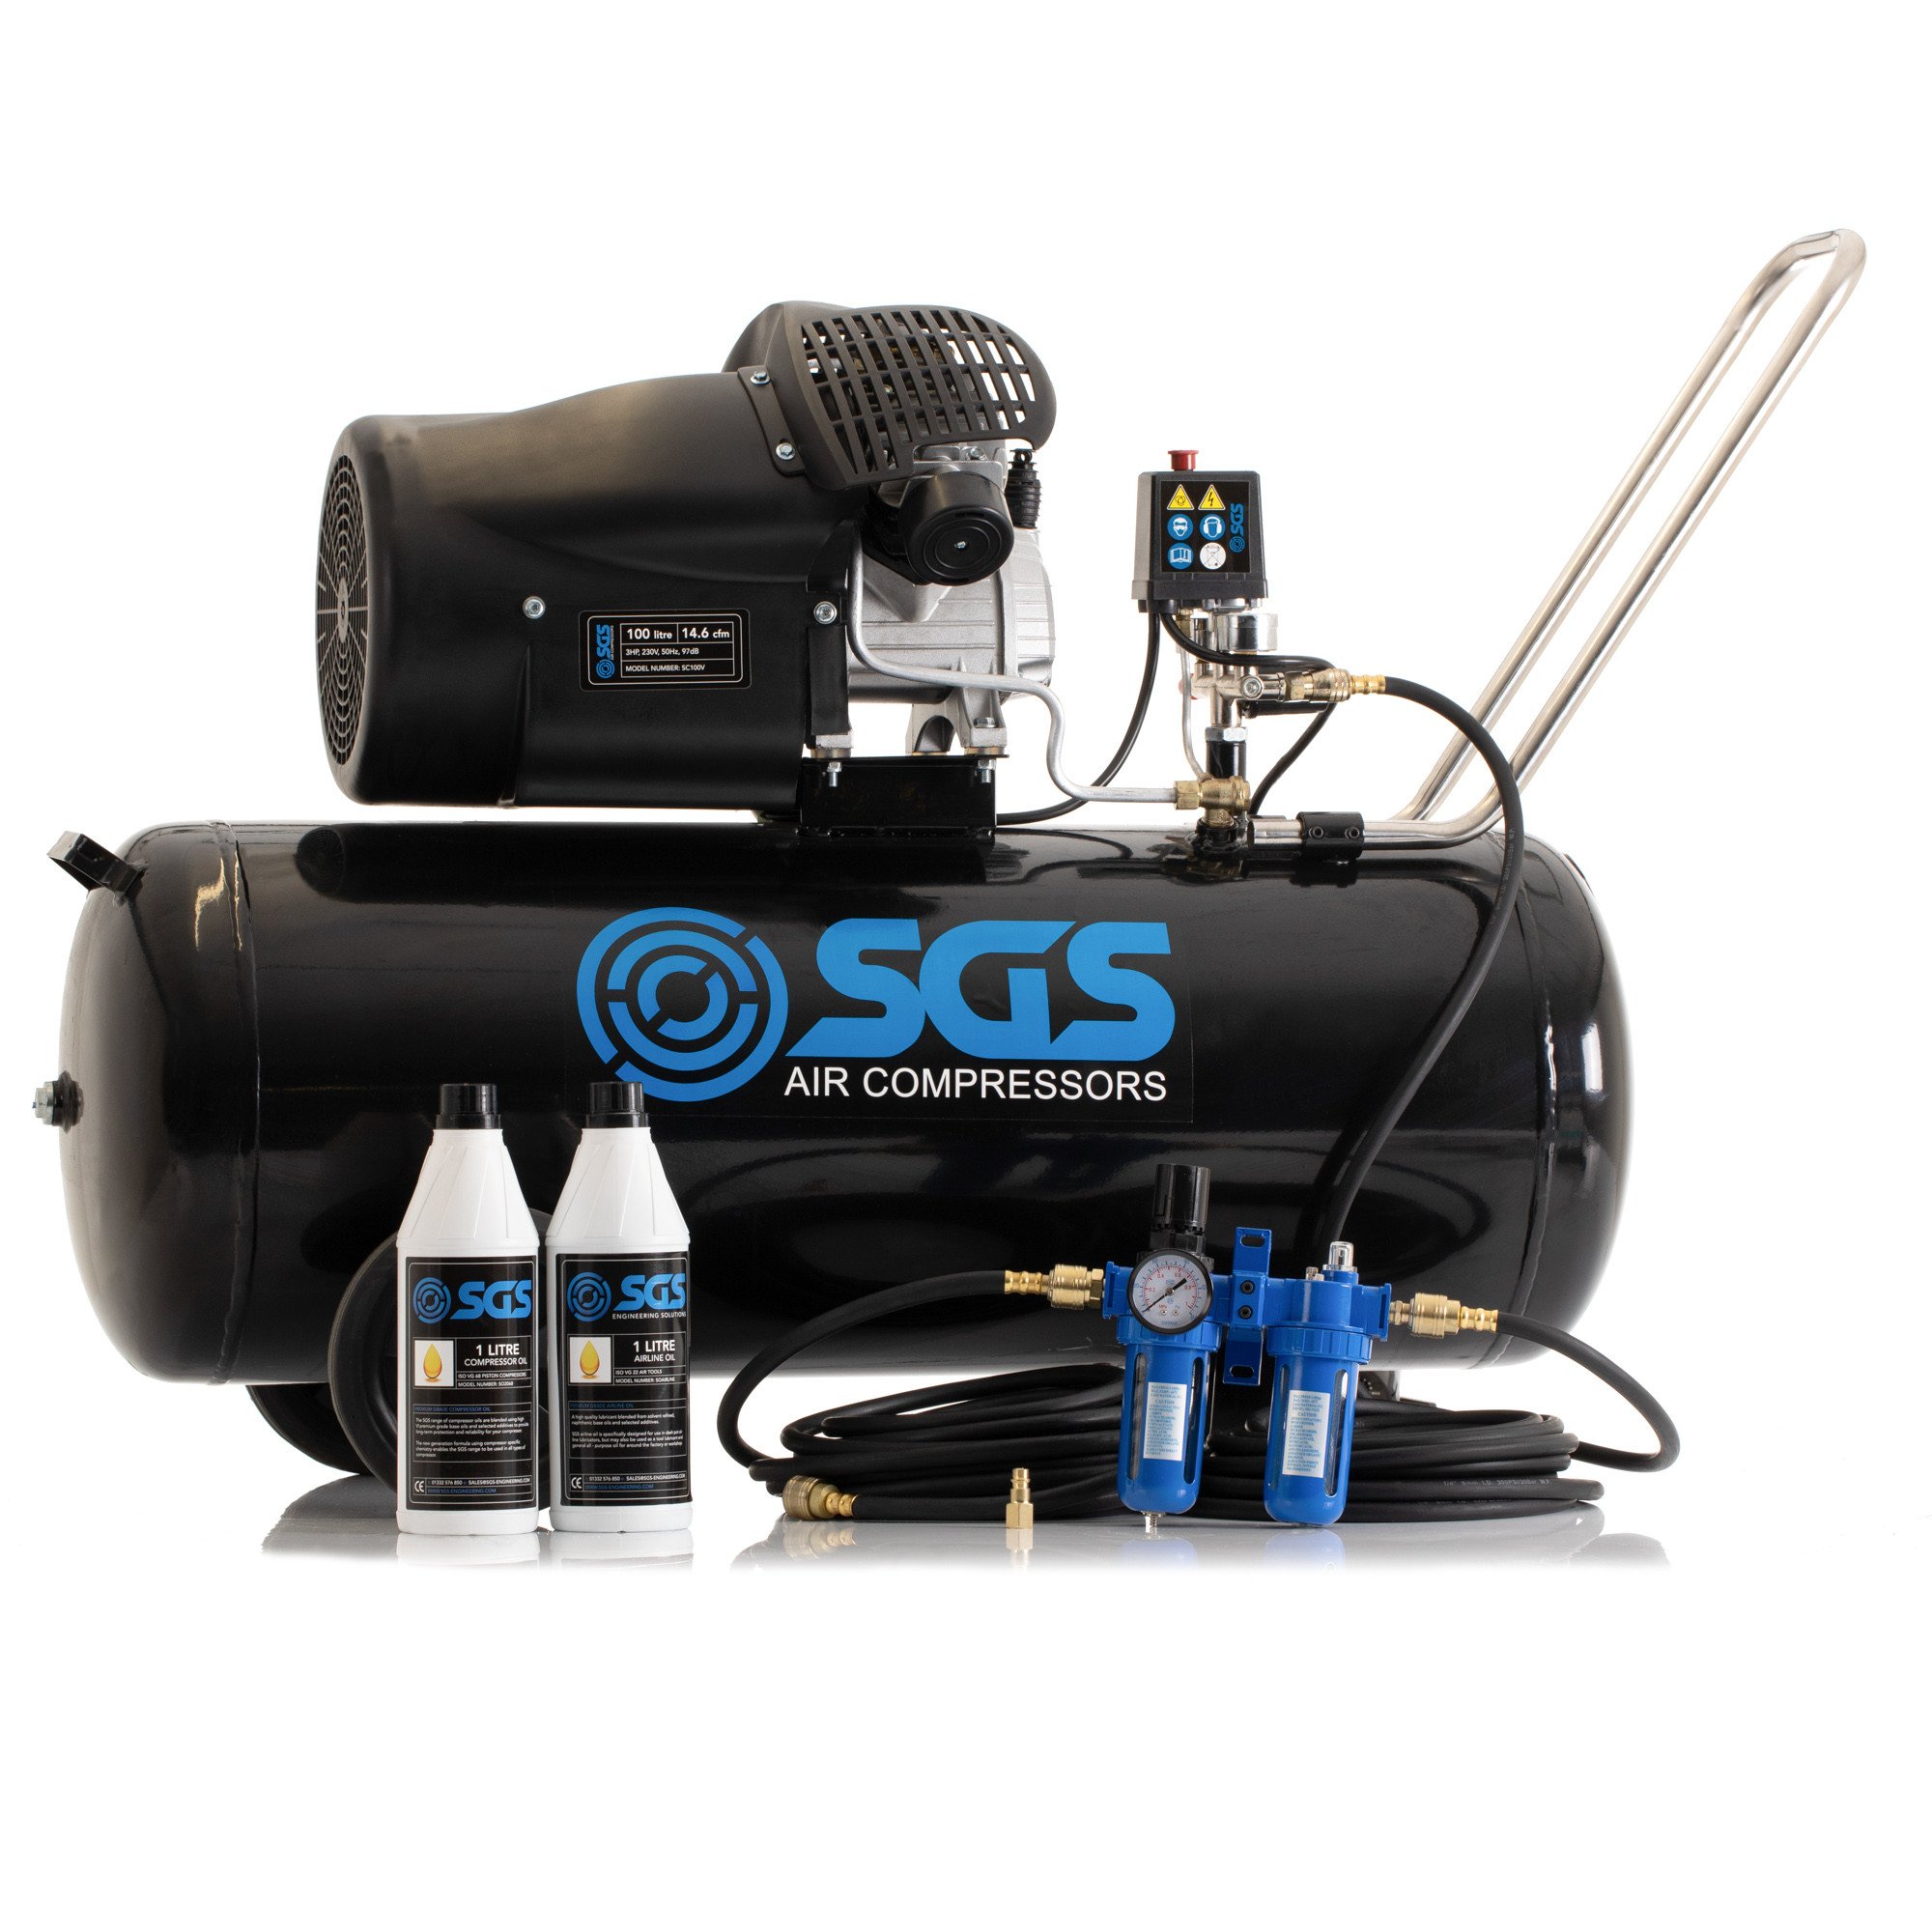 SGS 100升直接驱动空气压缩机和启动器套件- 14.6CFM 3.0HP 100L